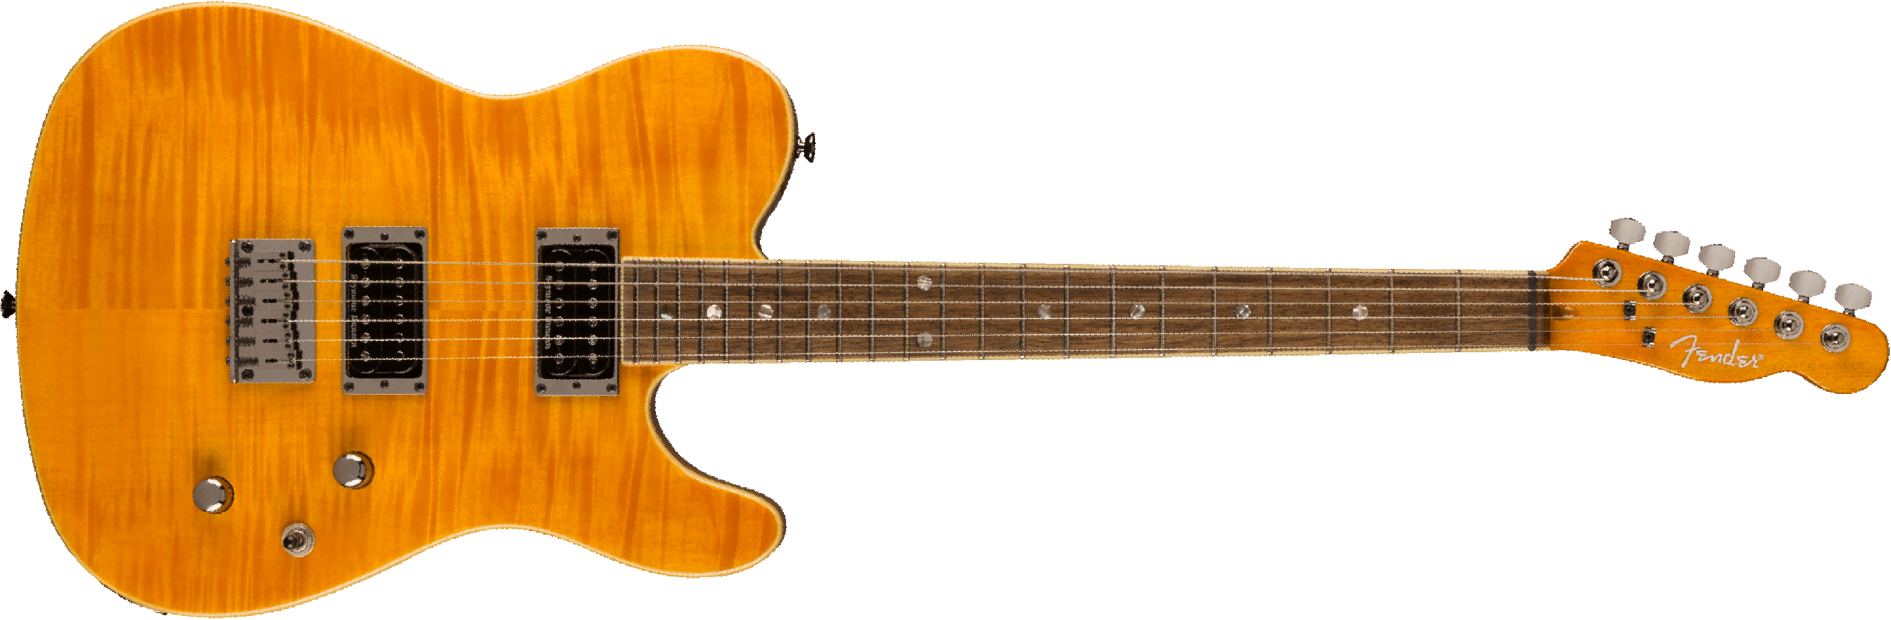 Fender Telecaster Korean Special Edition Custom Fmt (lau) - Amber - Tel shape electric guitar - Main picture